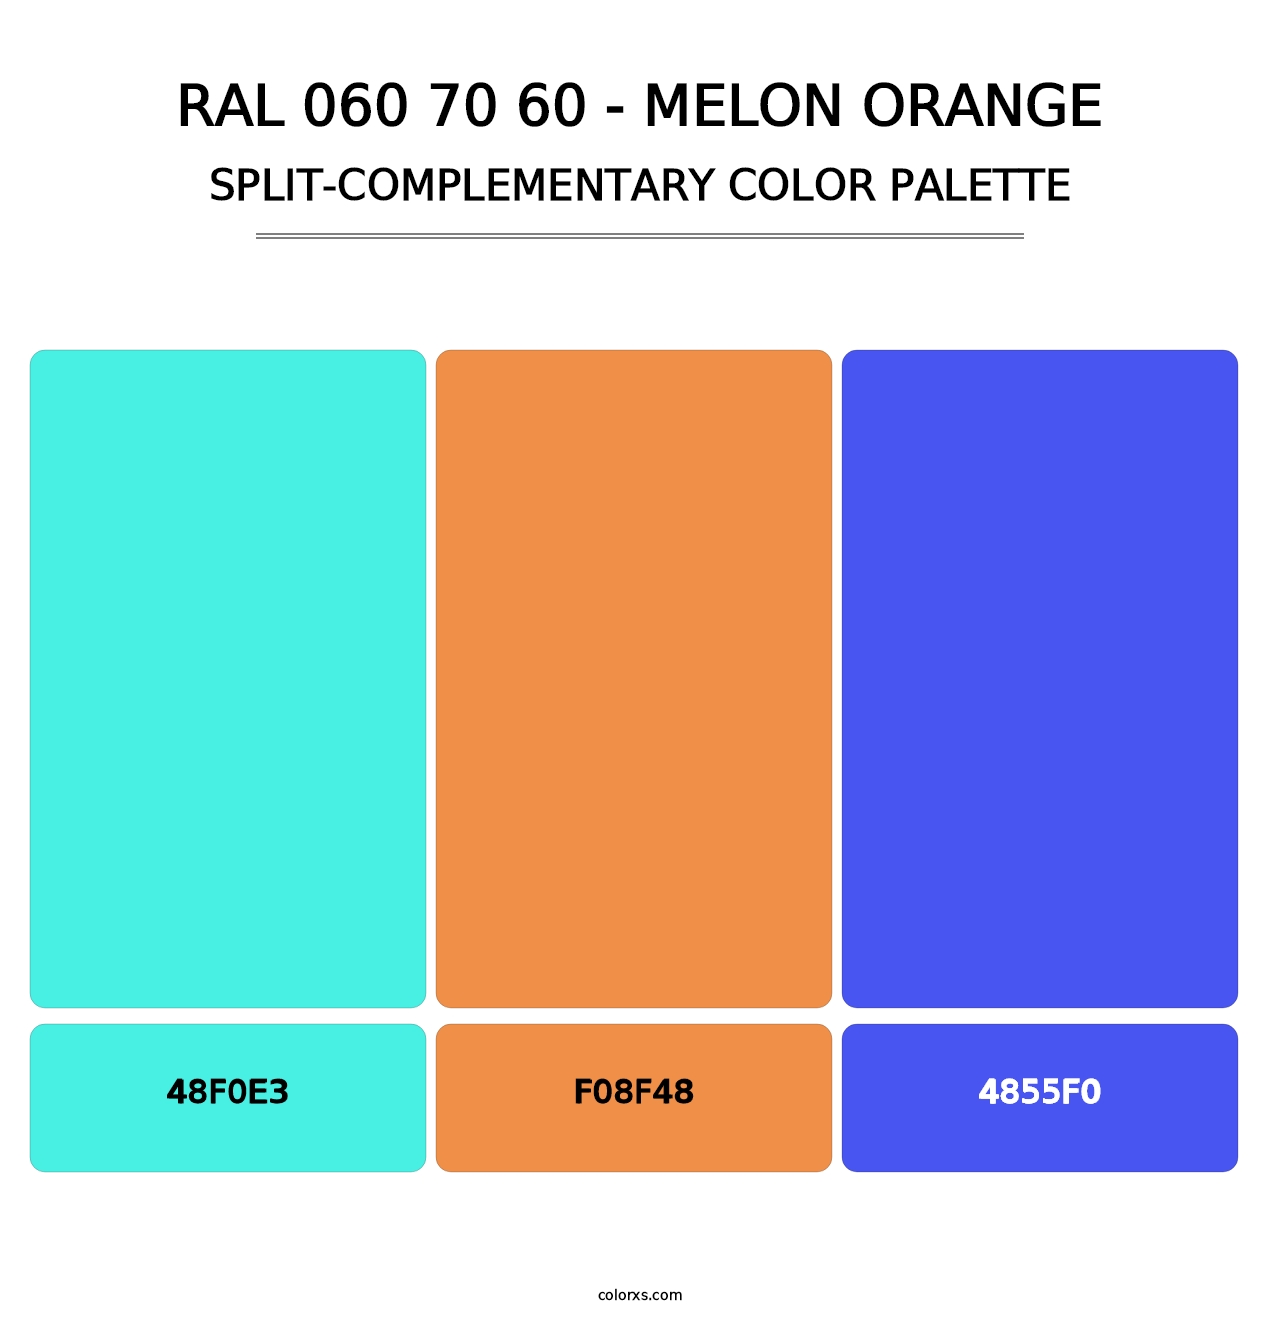 RAL 060 70 60 - Melon Orange - Split-Complementary Color Palette